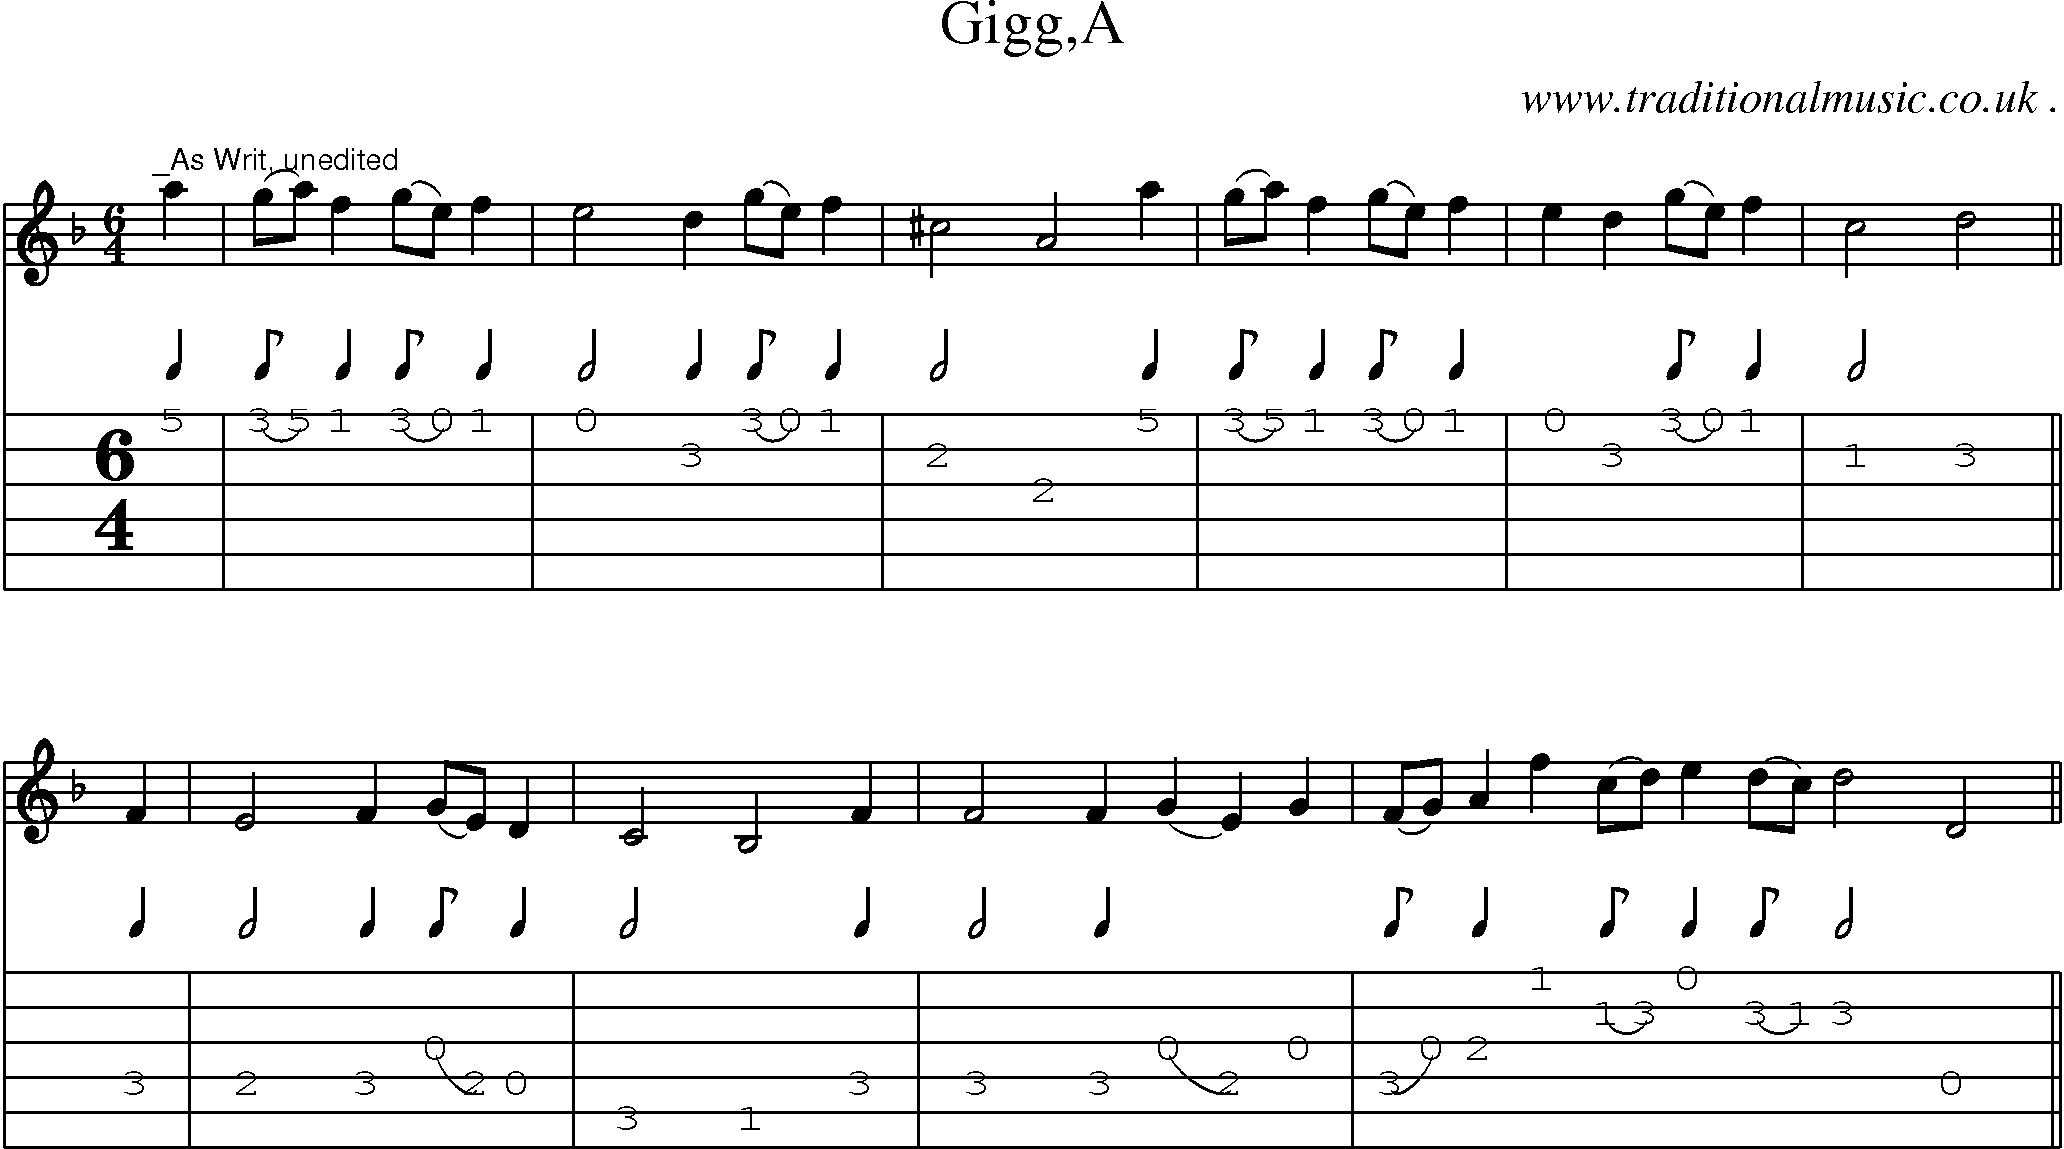 Sheet-Music and Guitar Tabs for Gigga